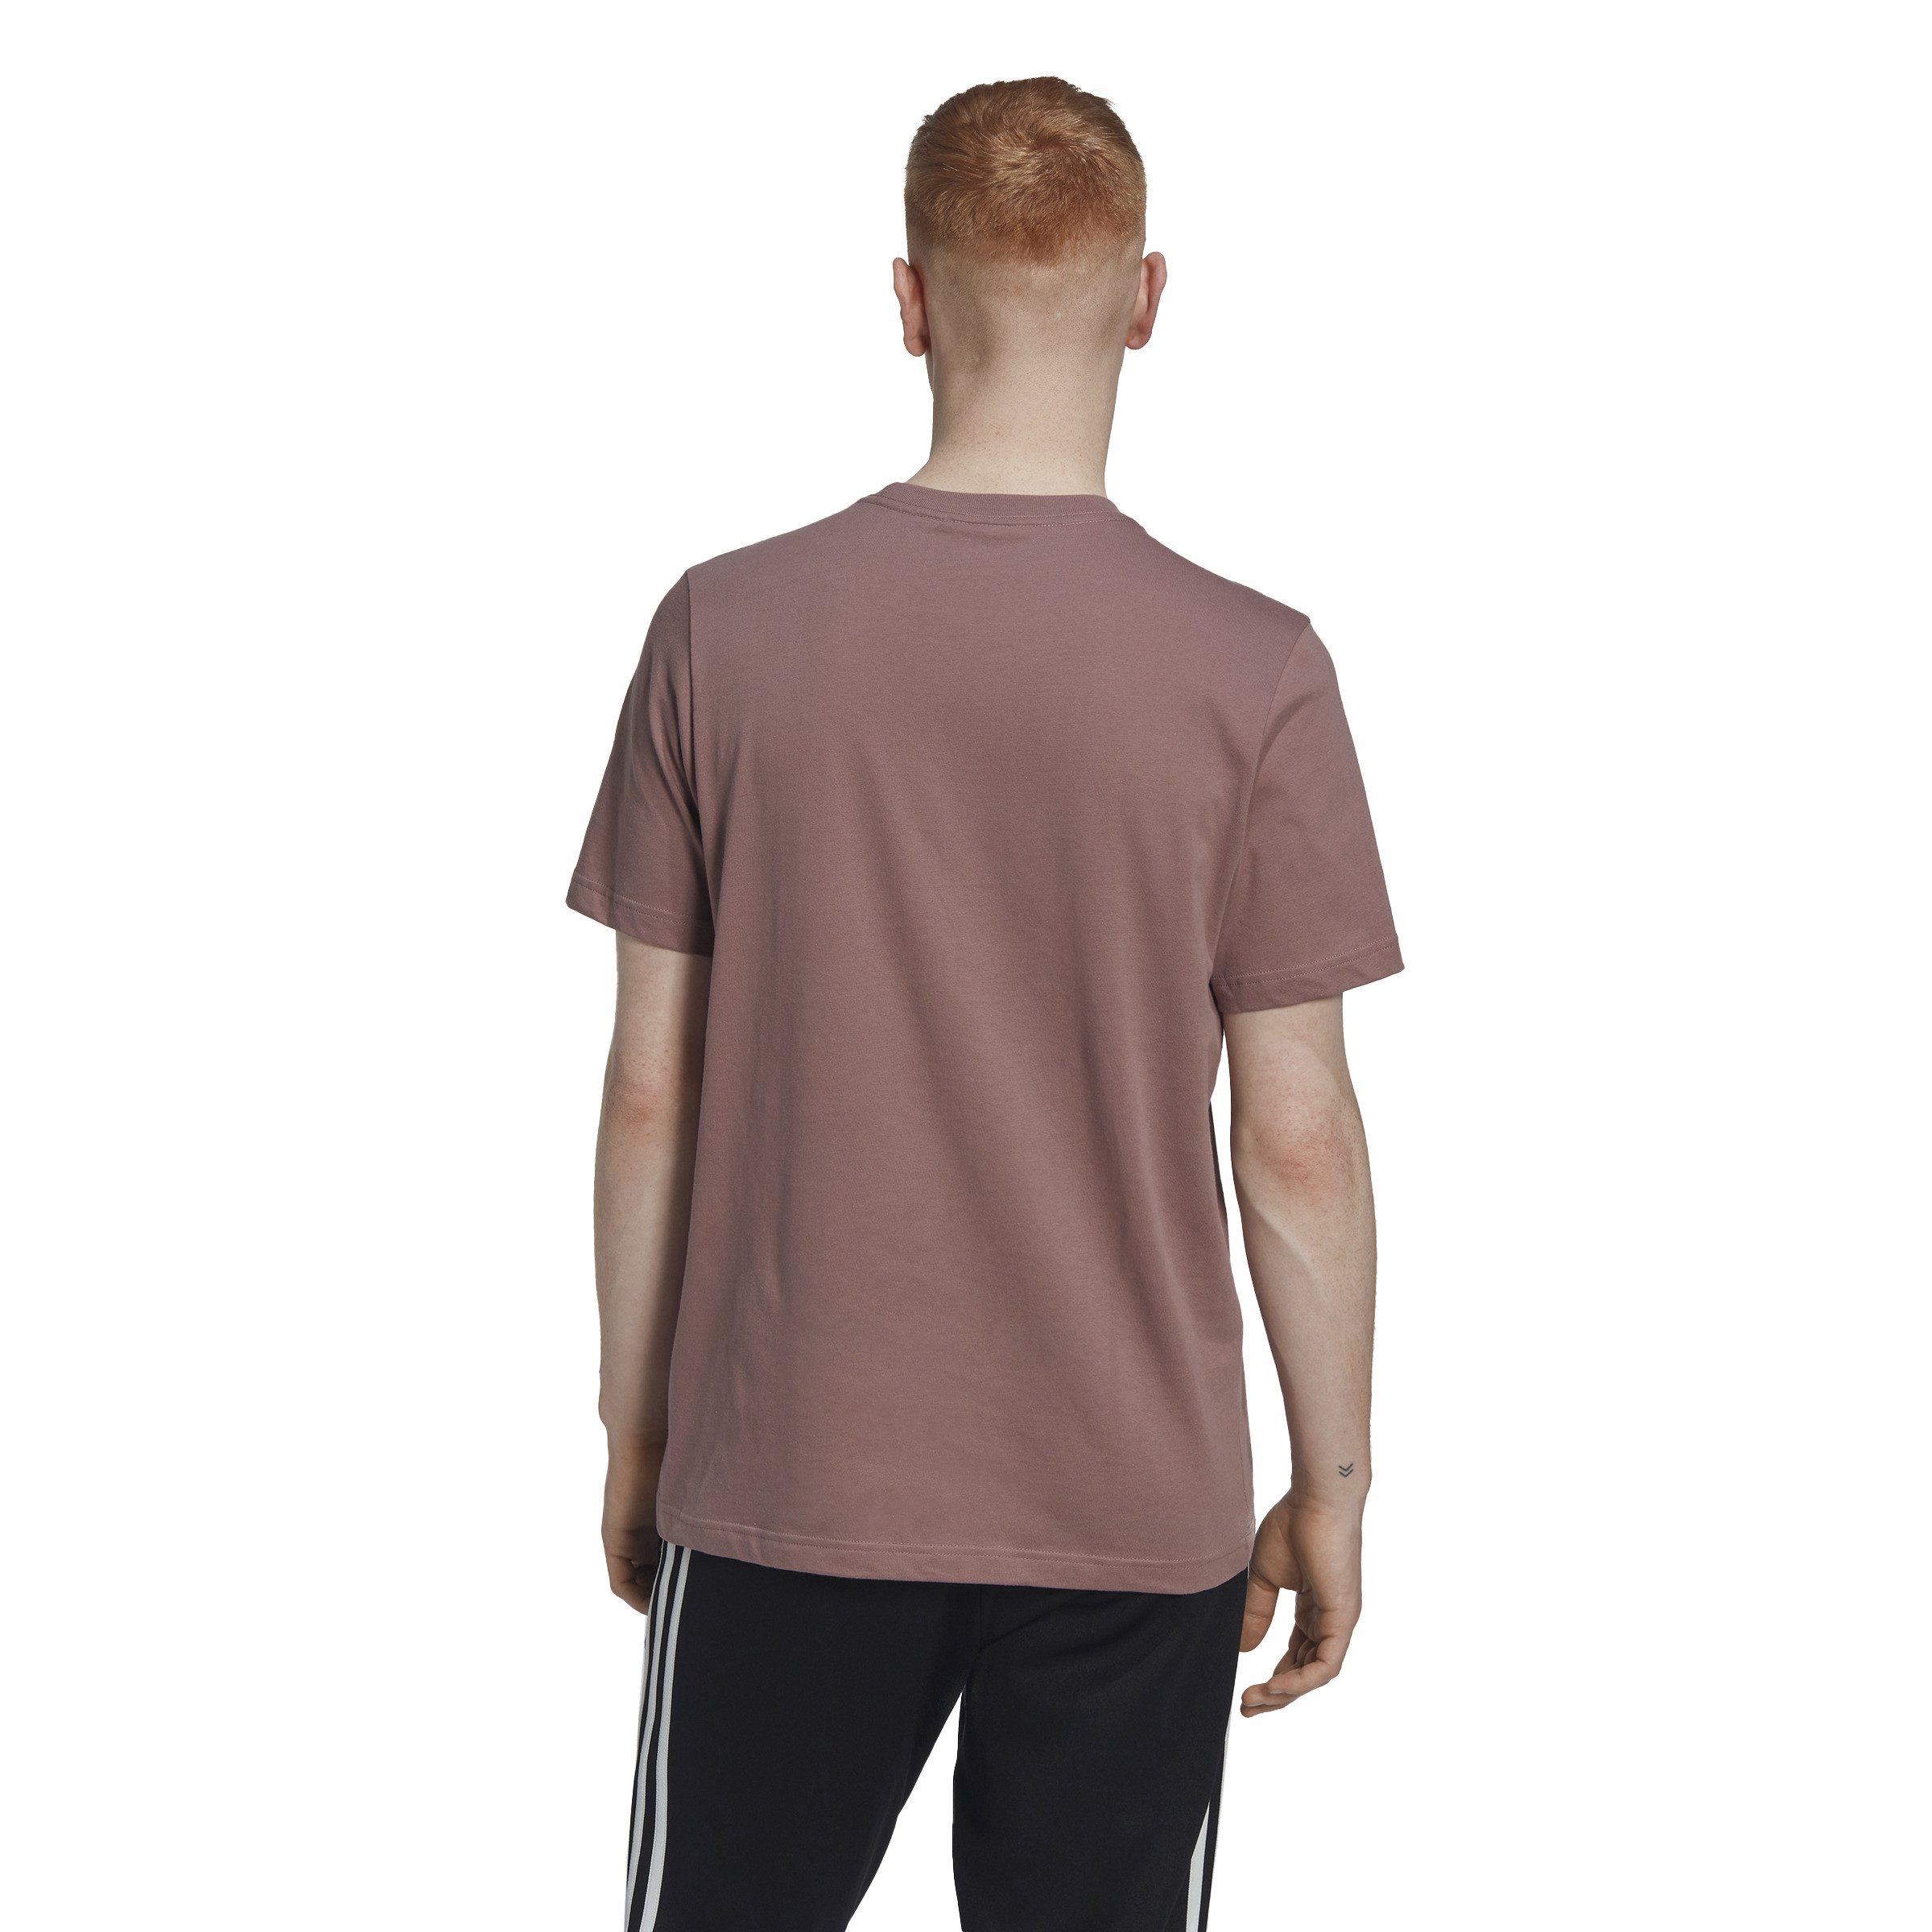 Adidas - Crewneck T-shirt with logo, Antique Pink, large image number 6